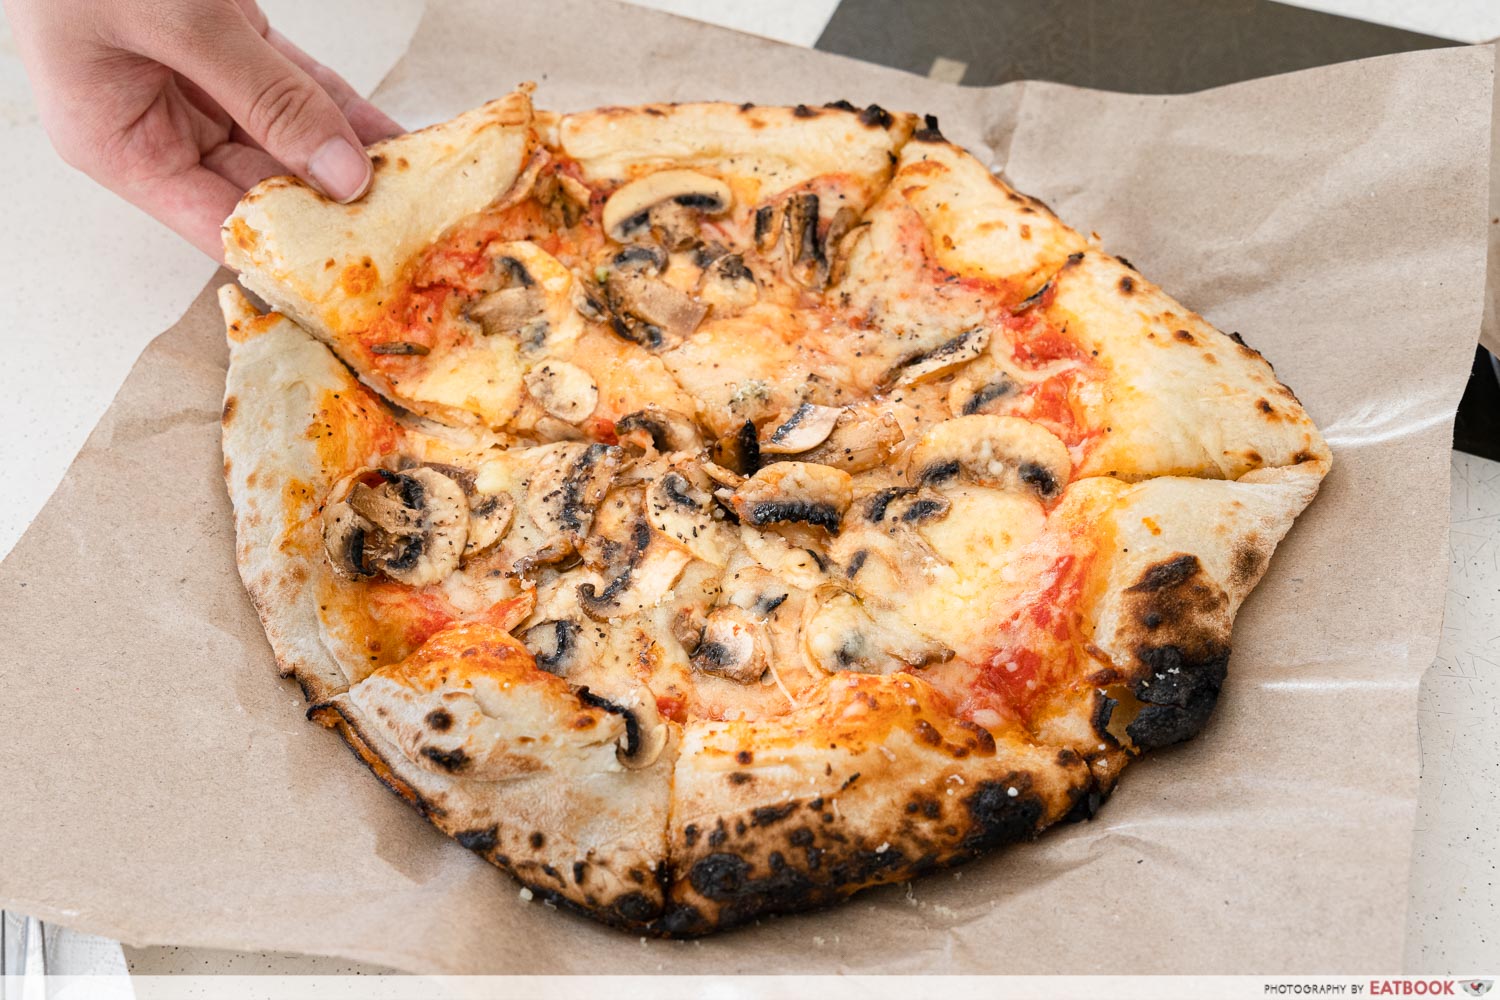 mat western - truffle mushroom pizza